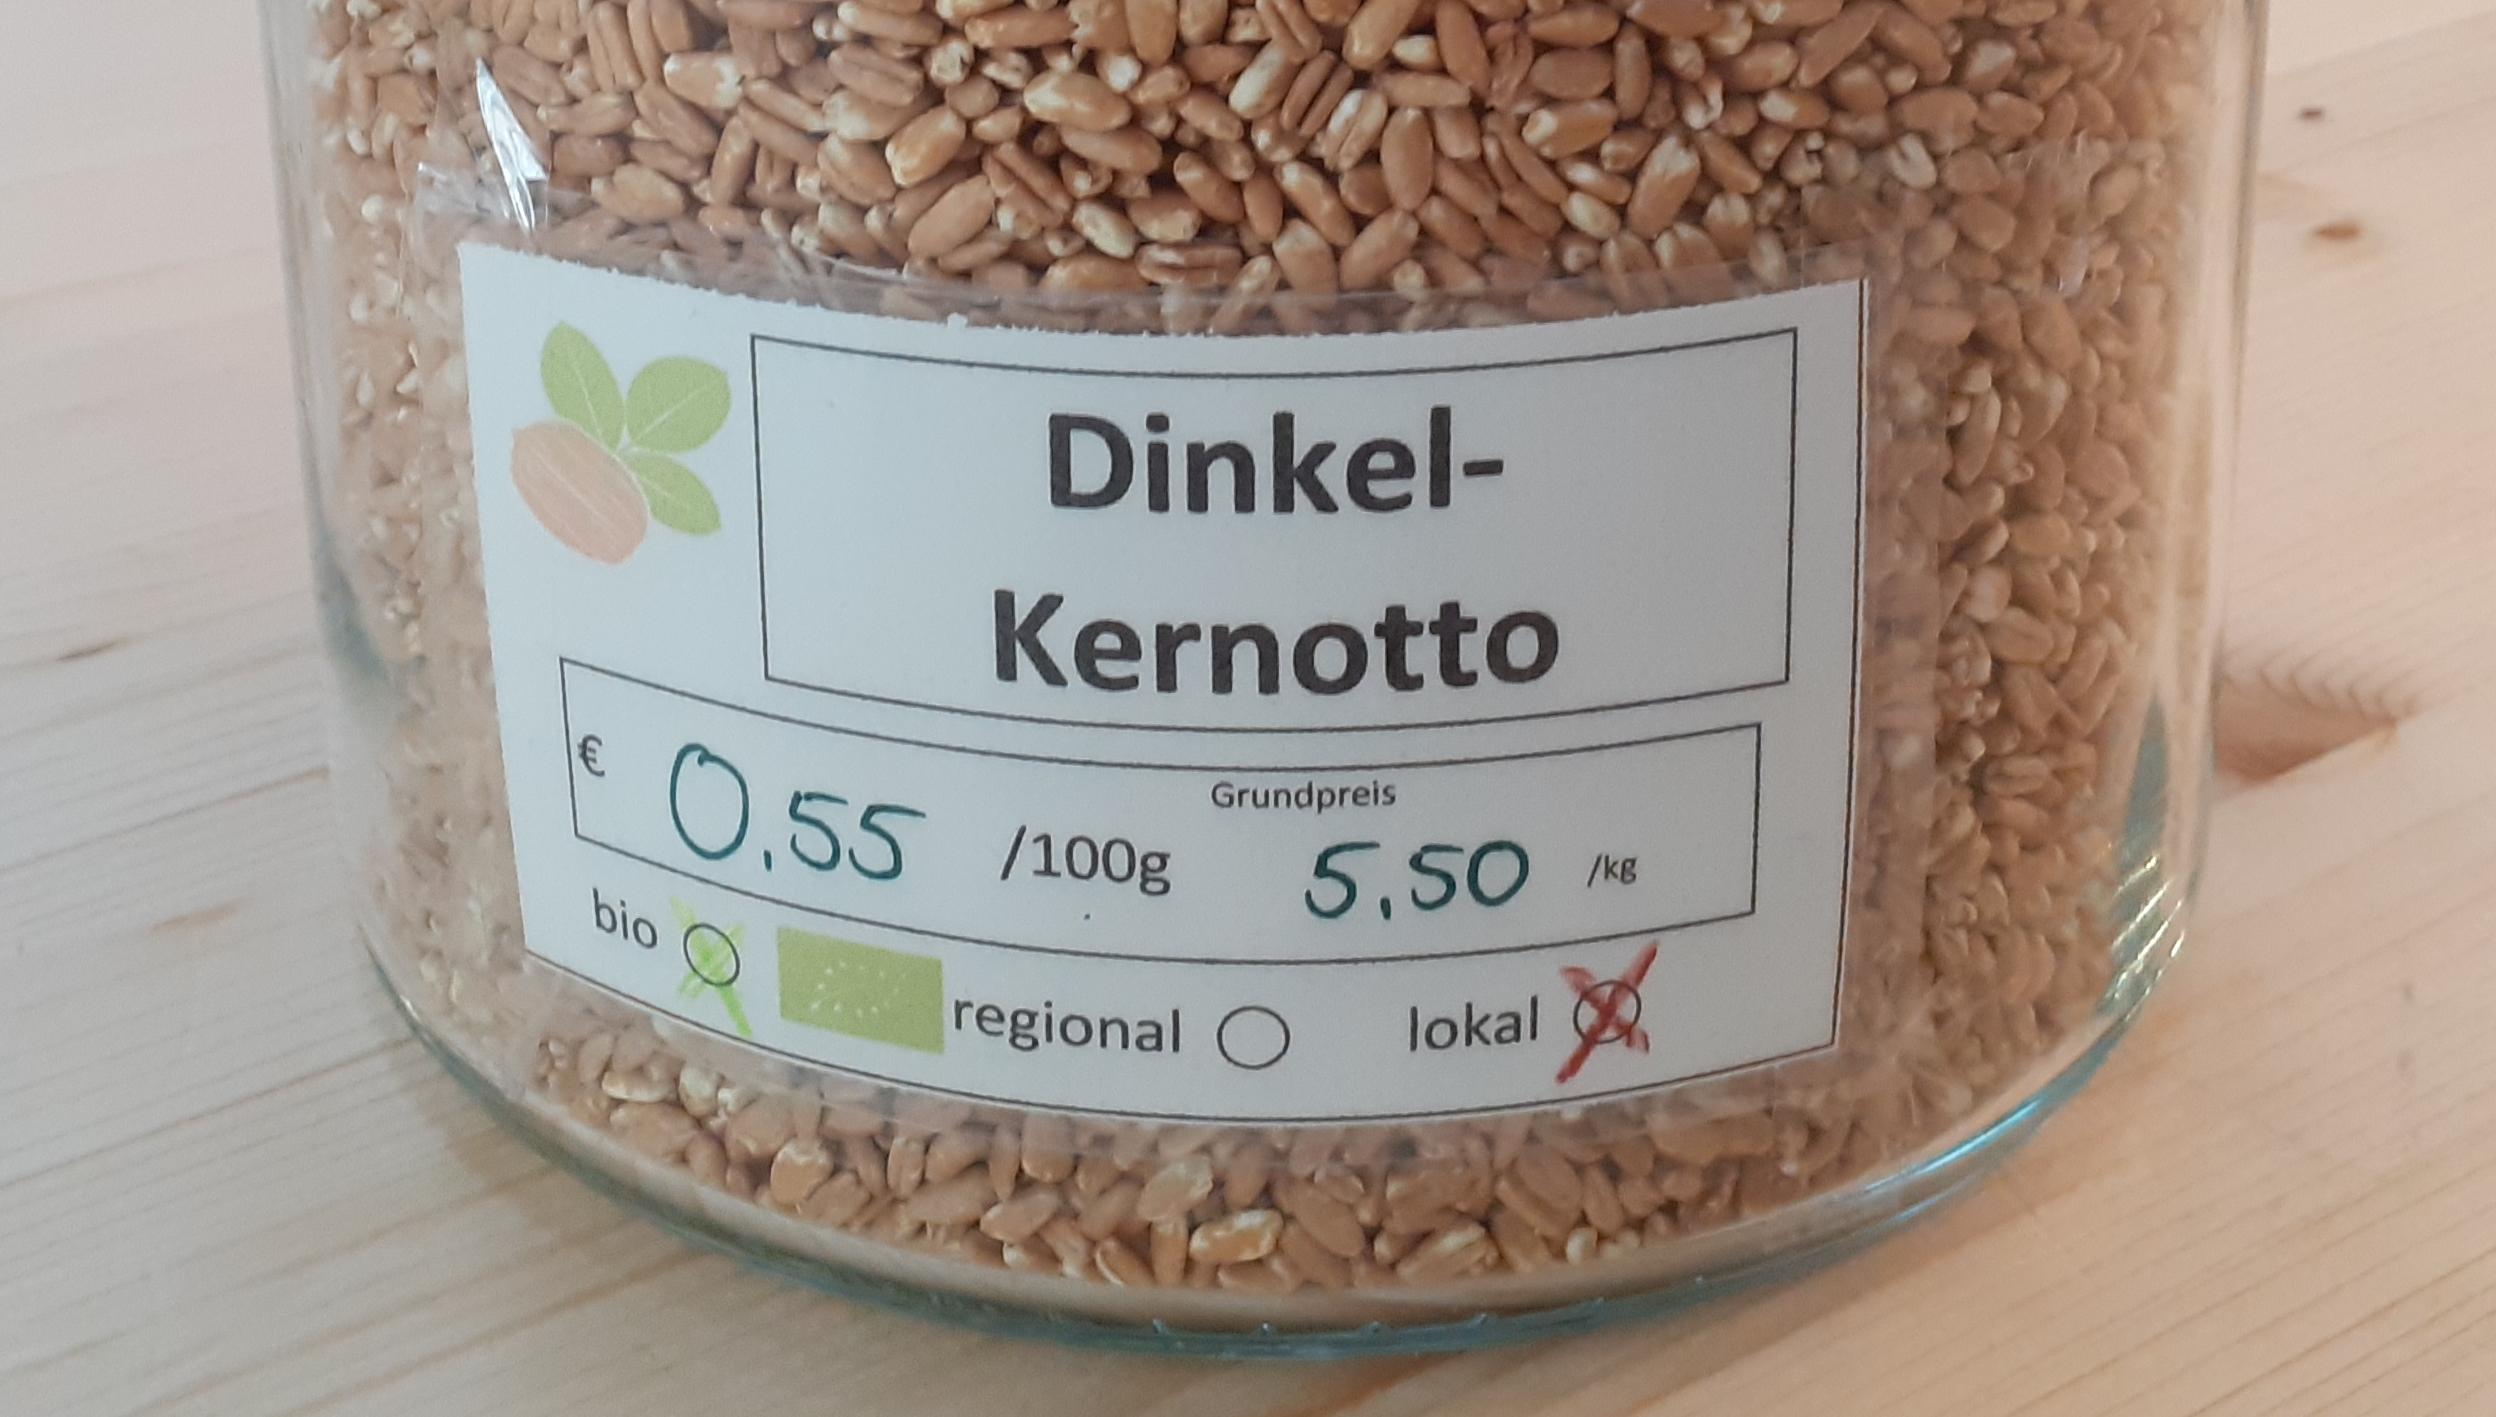 Dinkel-Kernotto